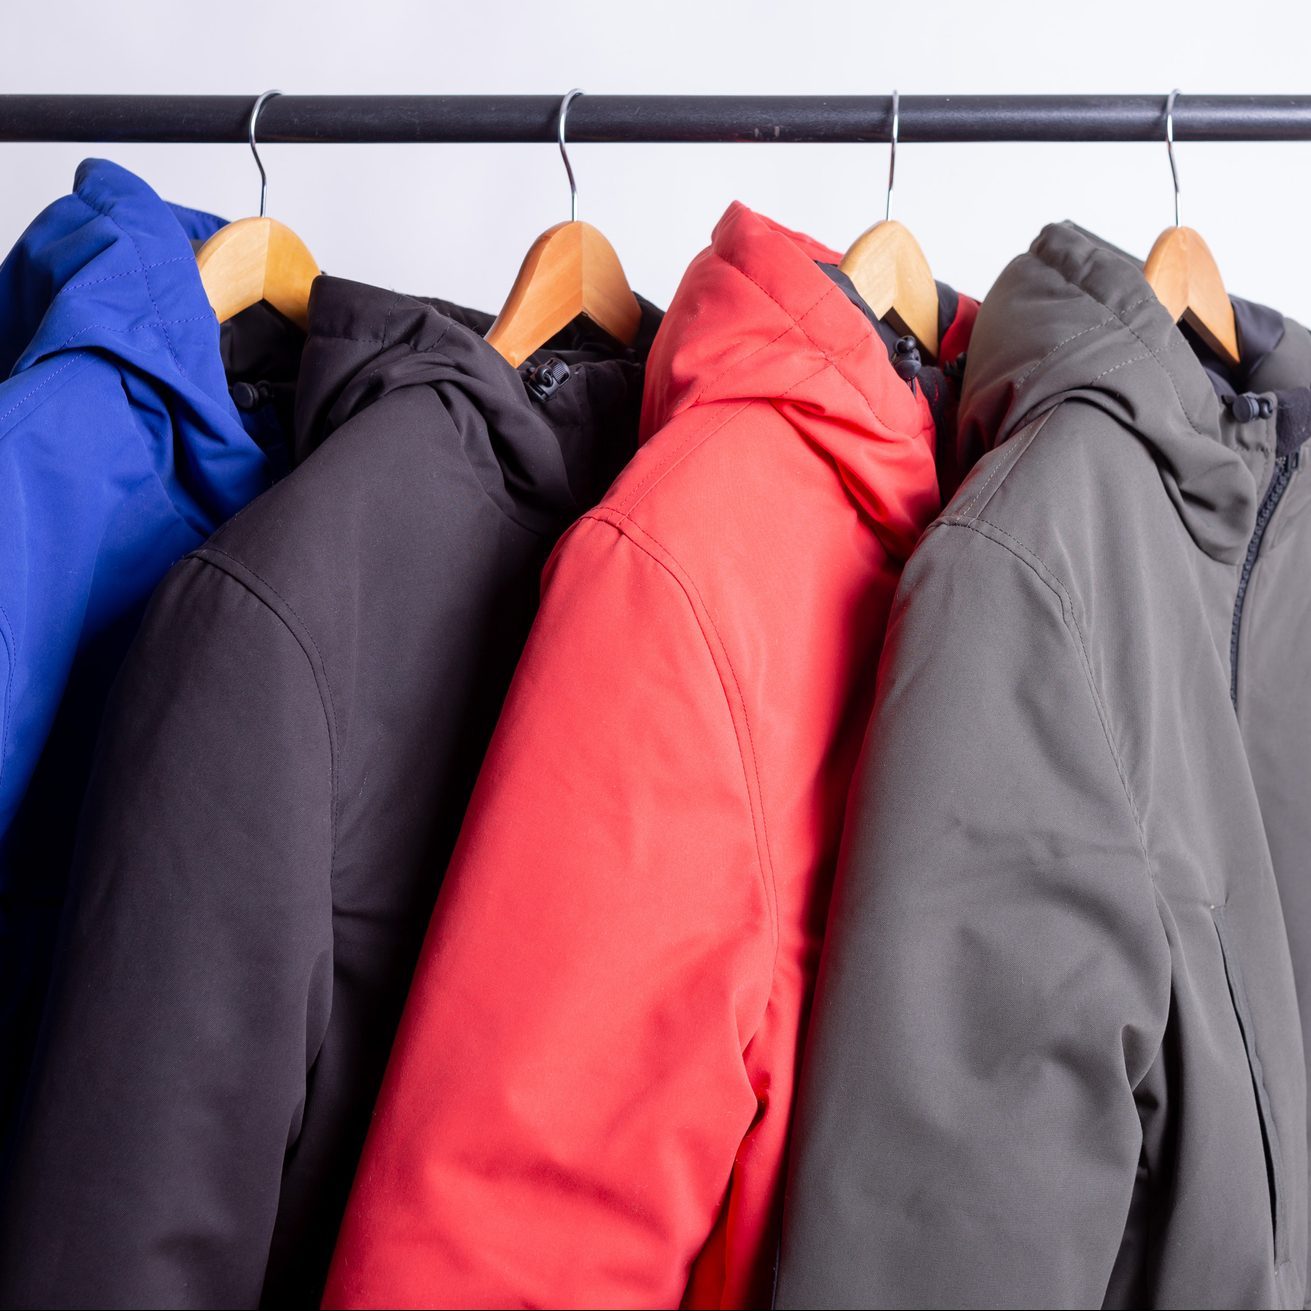 21 Coat Closet Organization Ideas — Coat Closet Storage Solutions